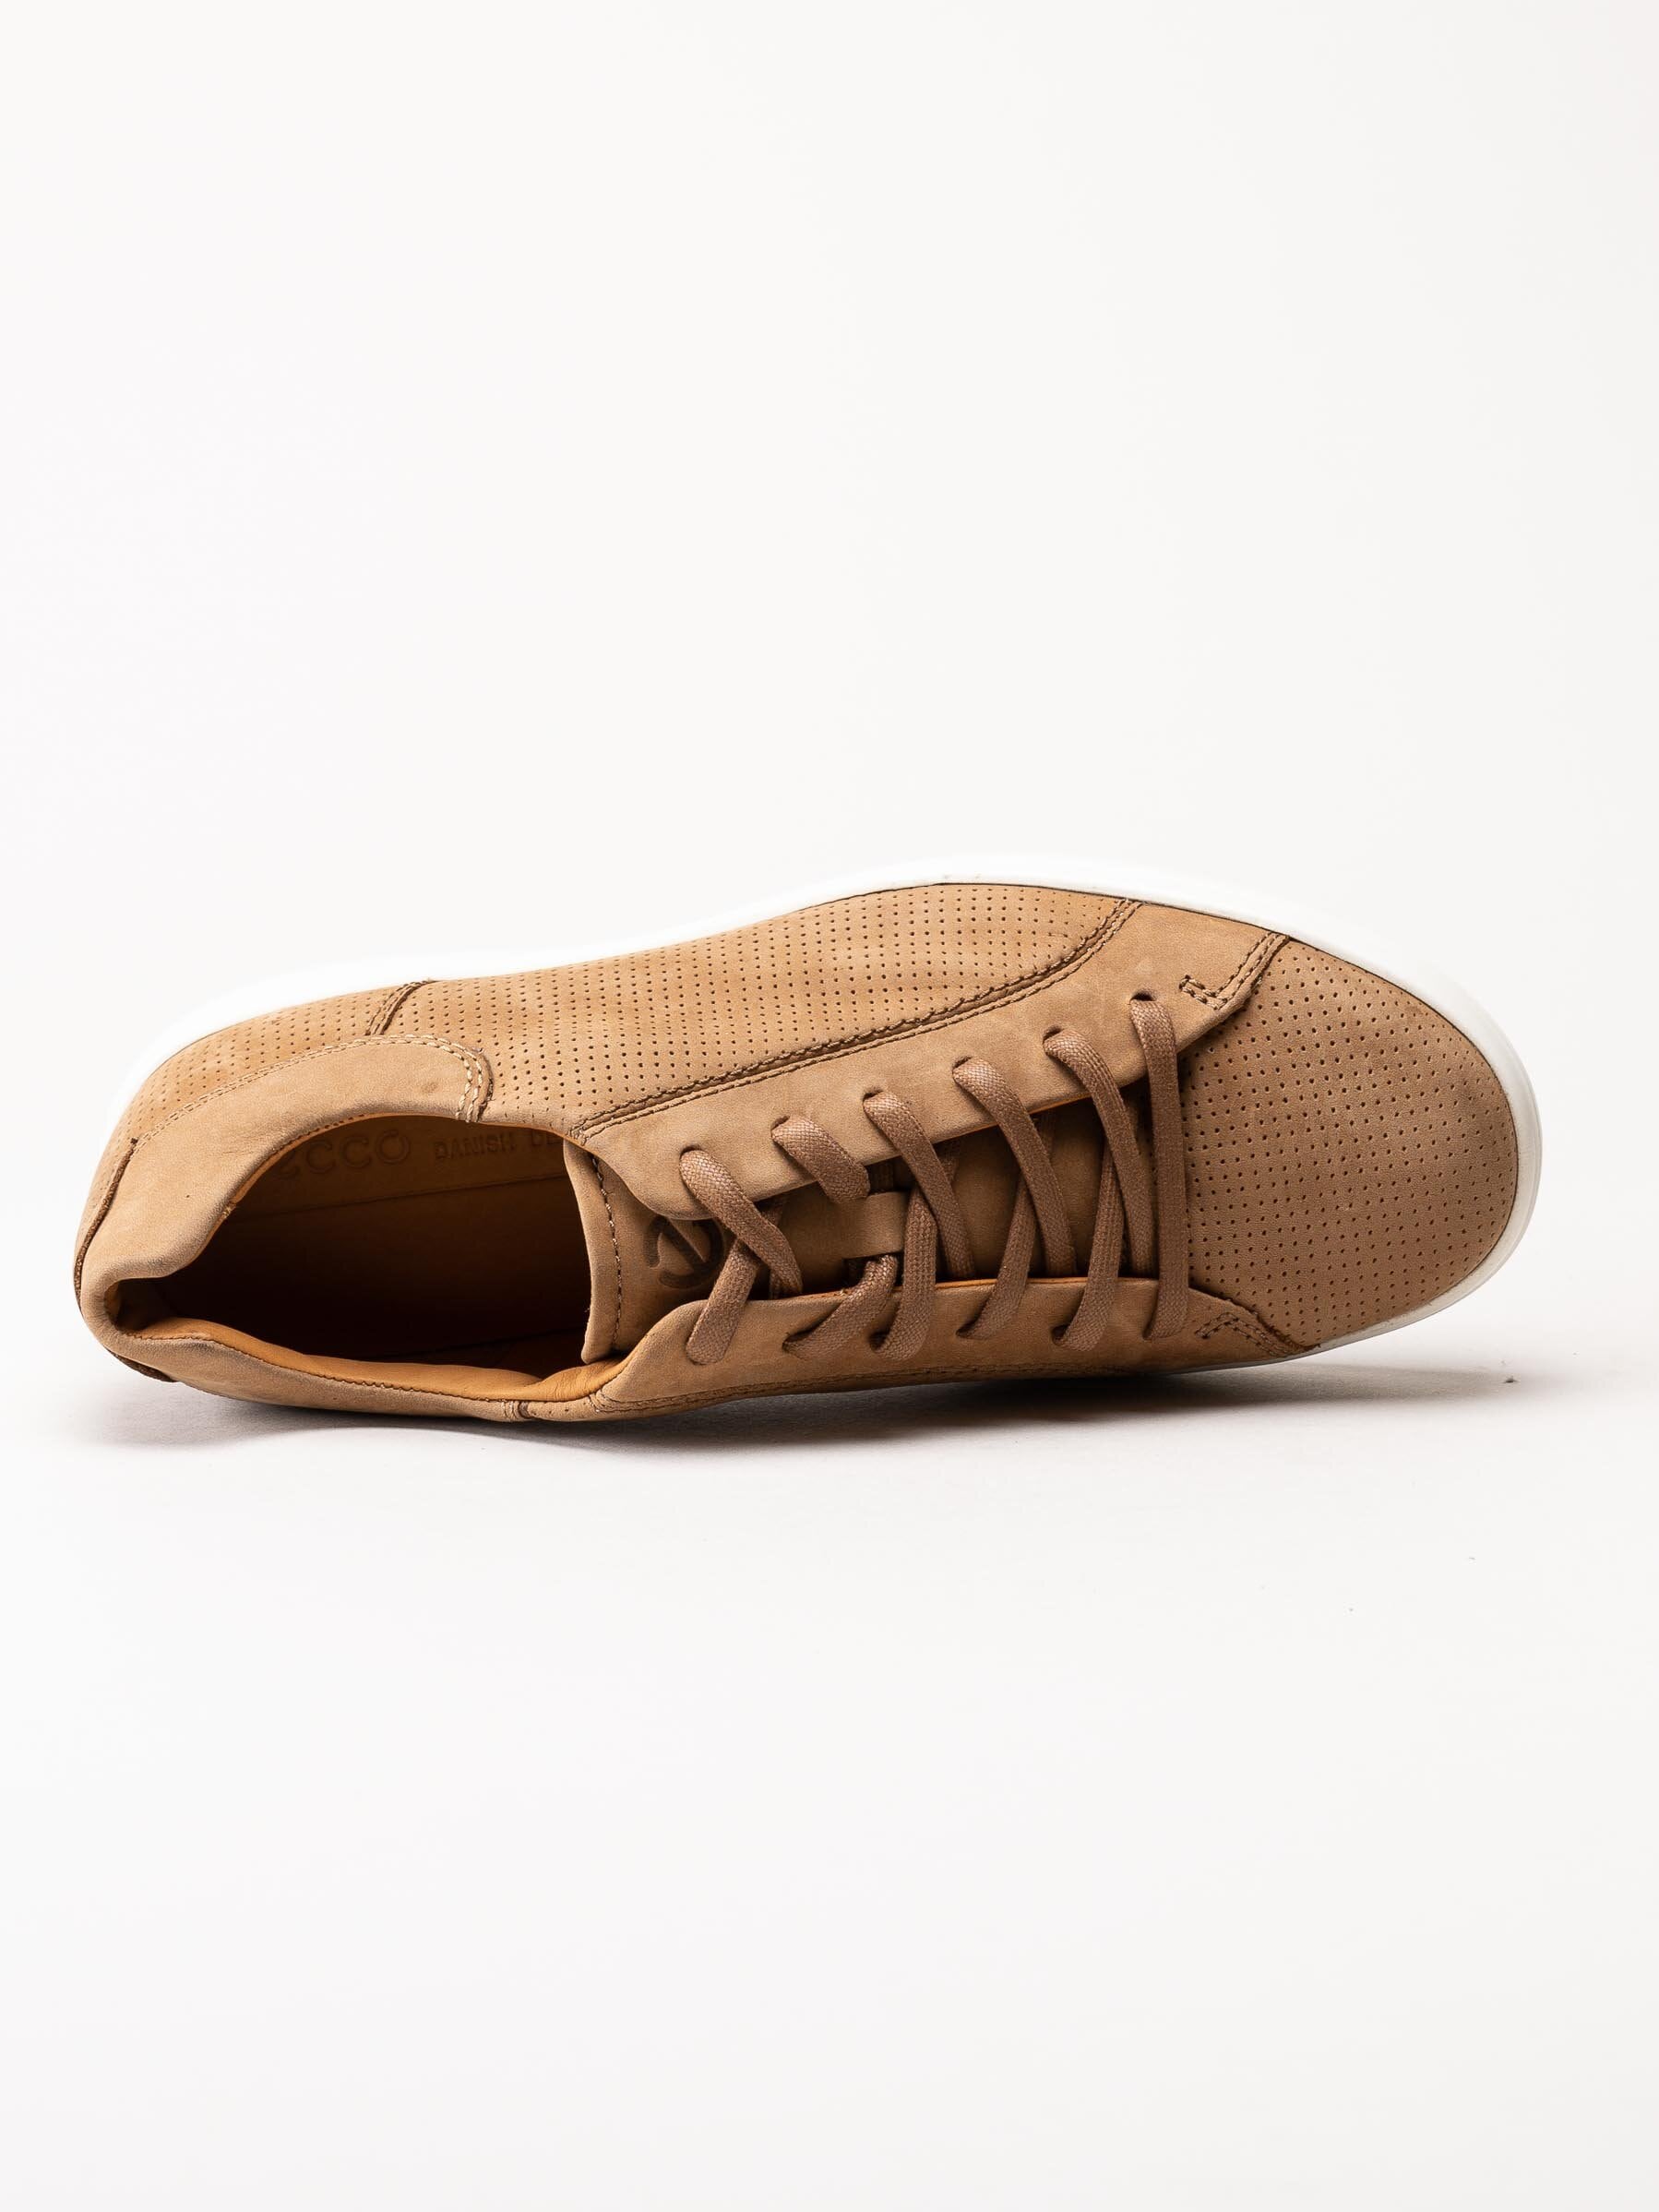 Ecco - Soft 7 M - Ljusbruna sneakers i nubuck